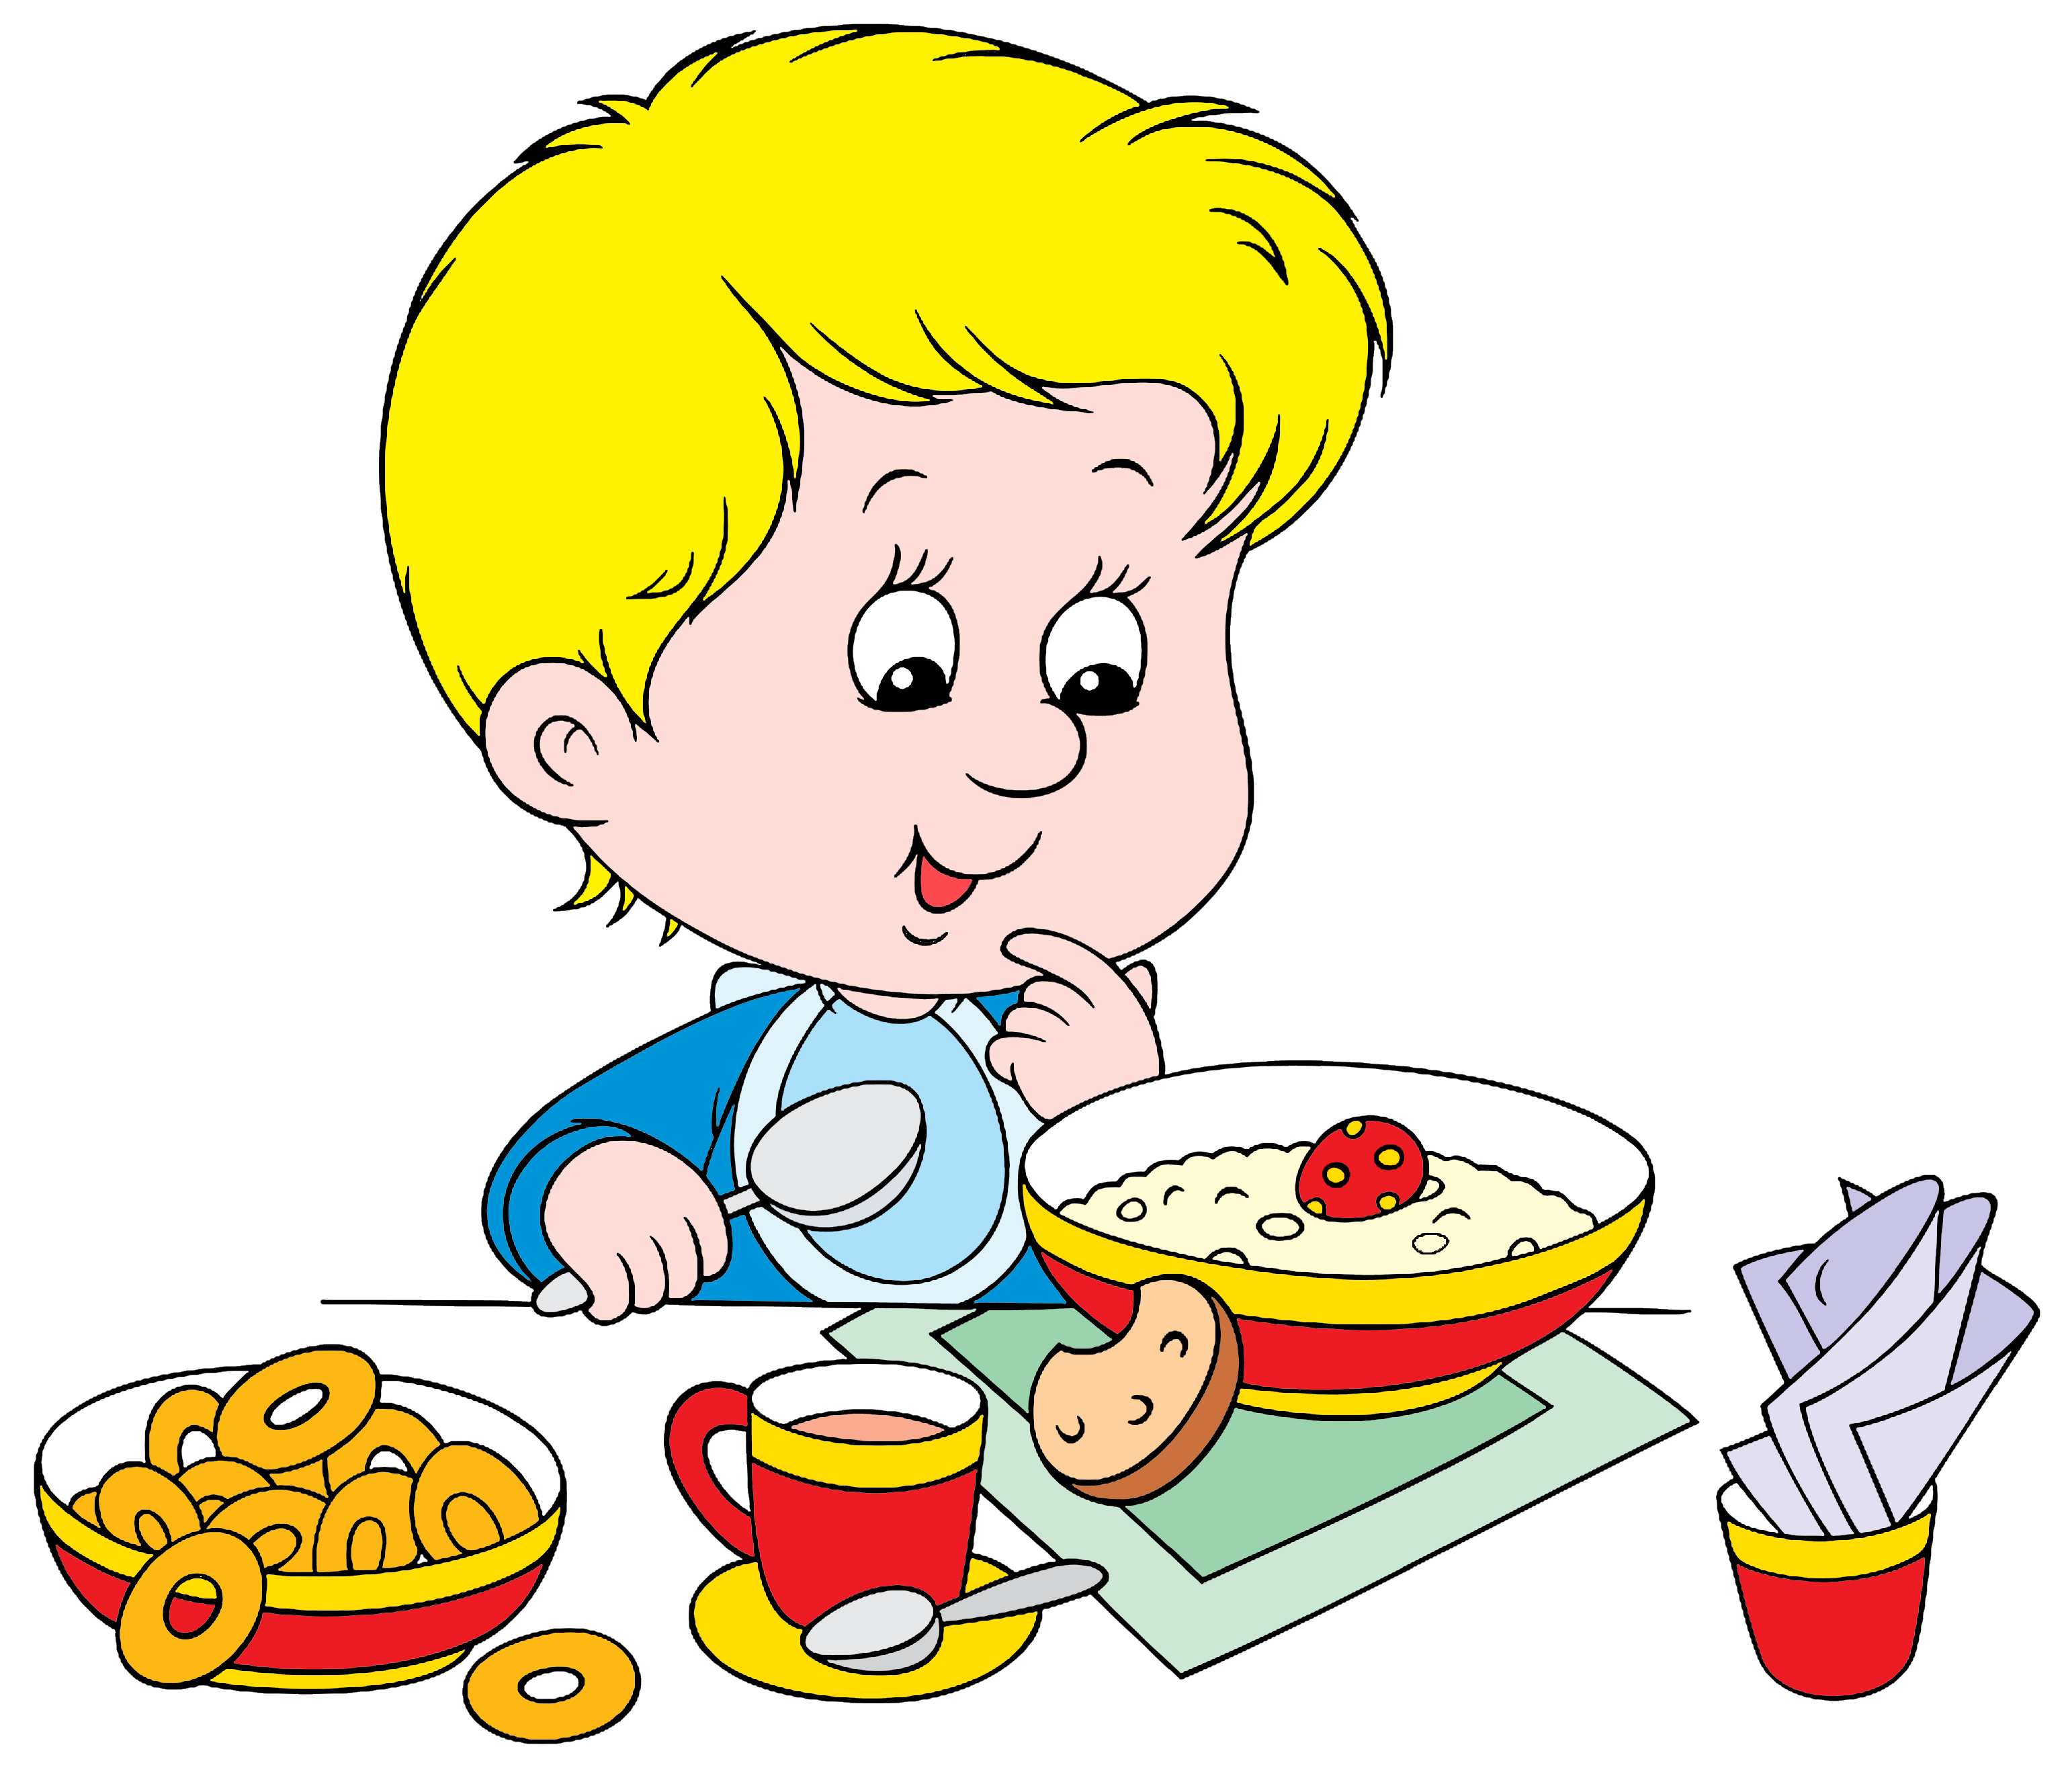 Завтрак картинки для детей. Завтрак детей в детском саду. Обед картинка для детей. Дети кушают в детском саду.